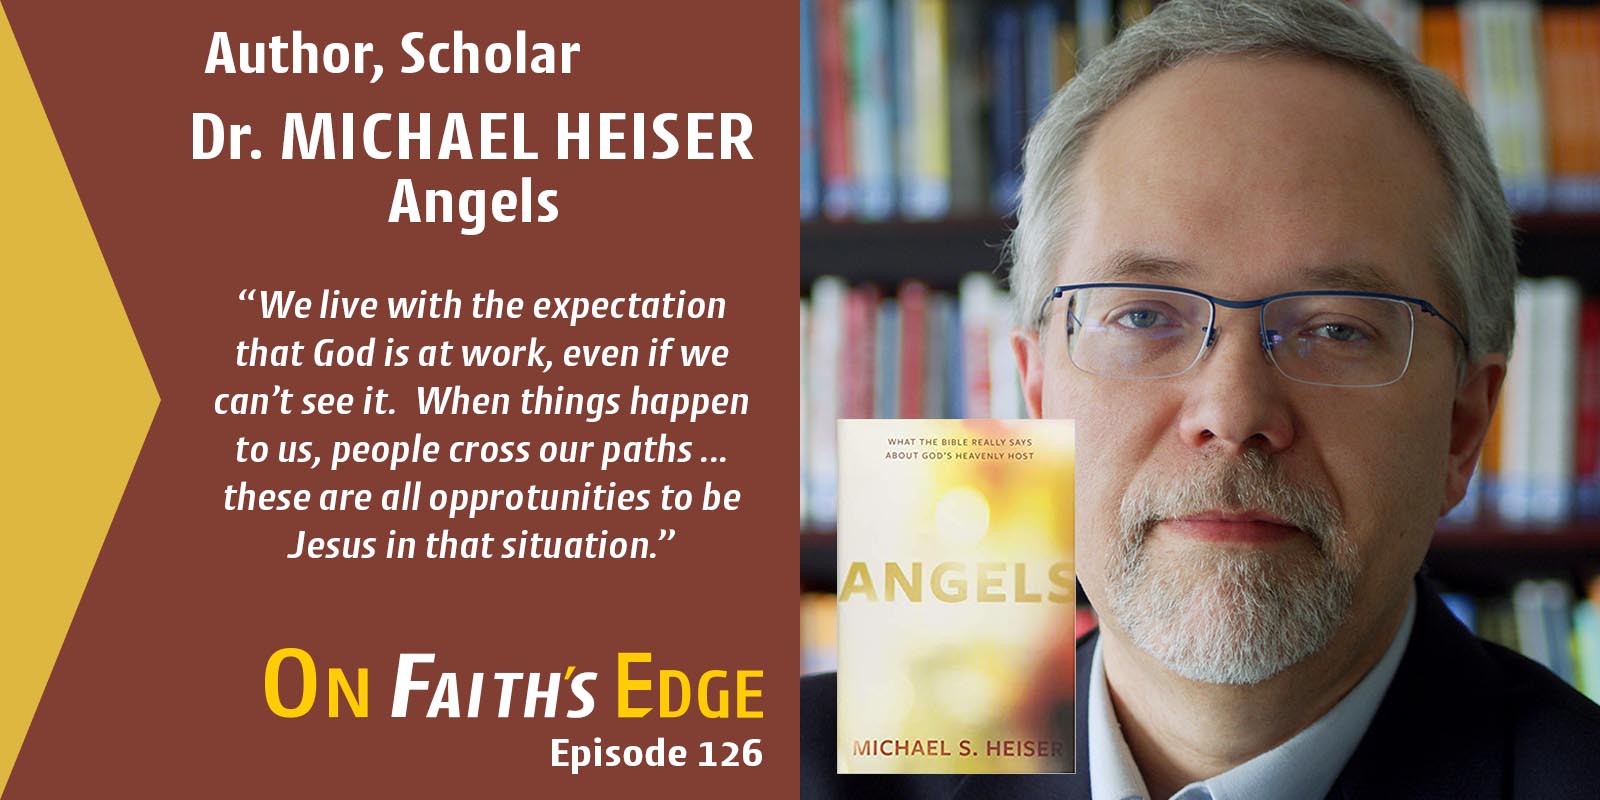 What are Angels? Dr. Michael Heiser On Faith's Edge